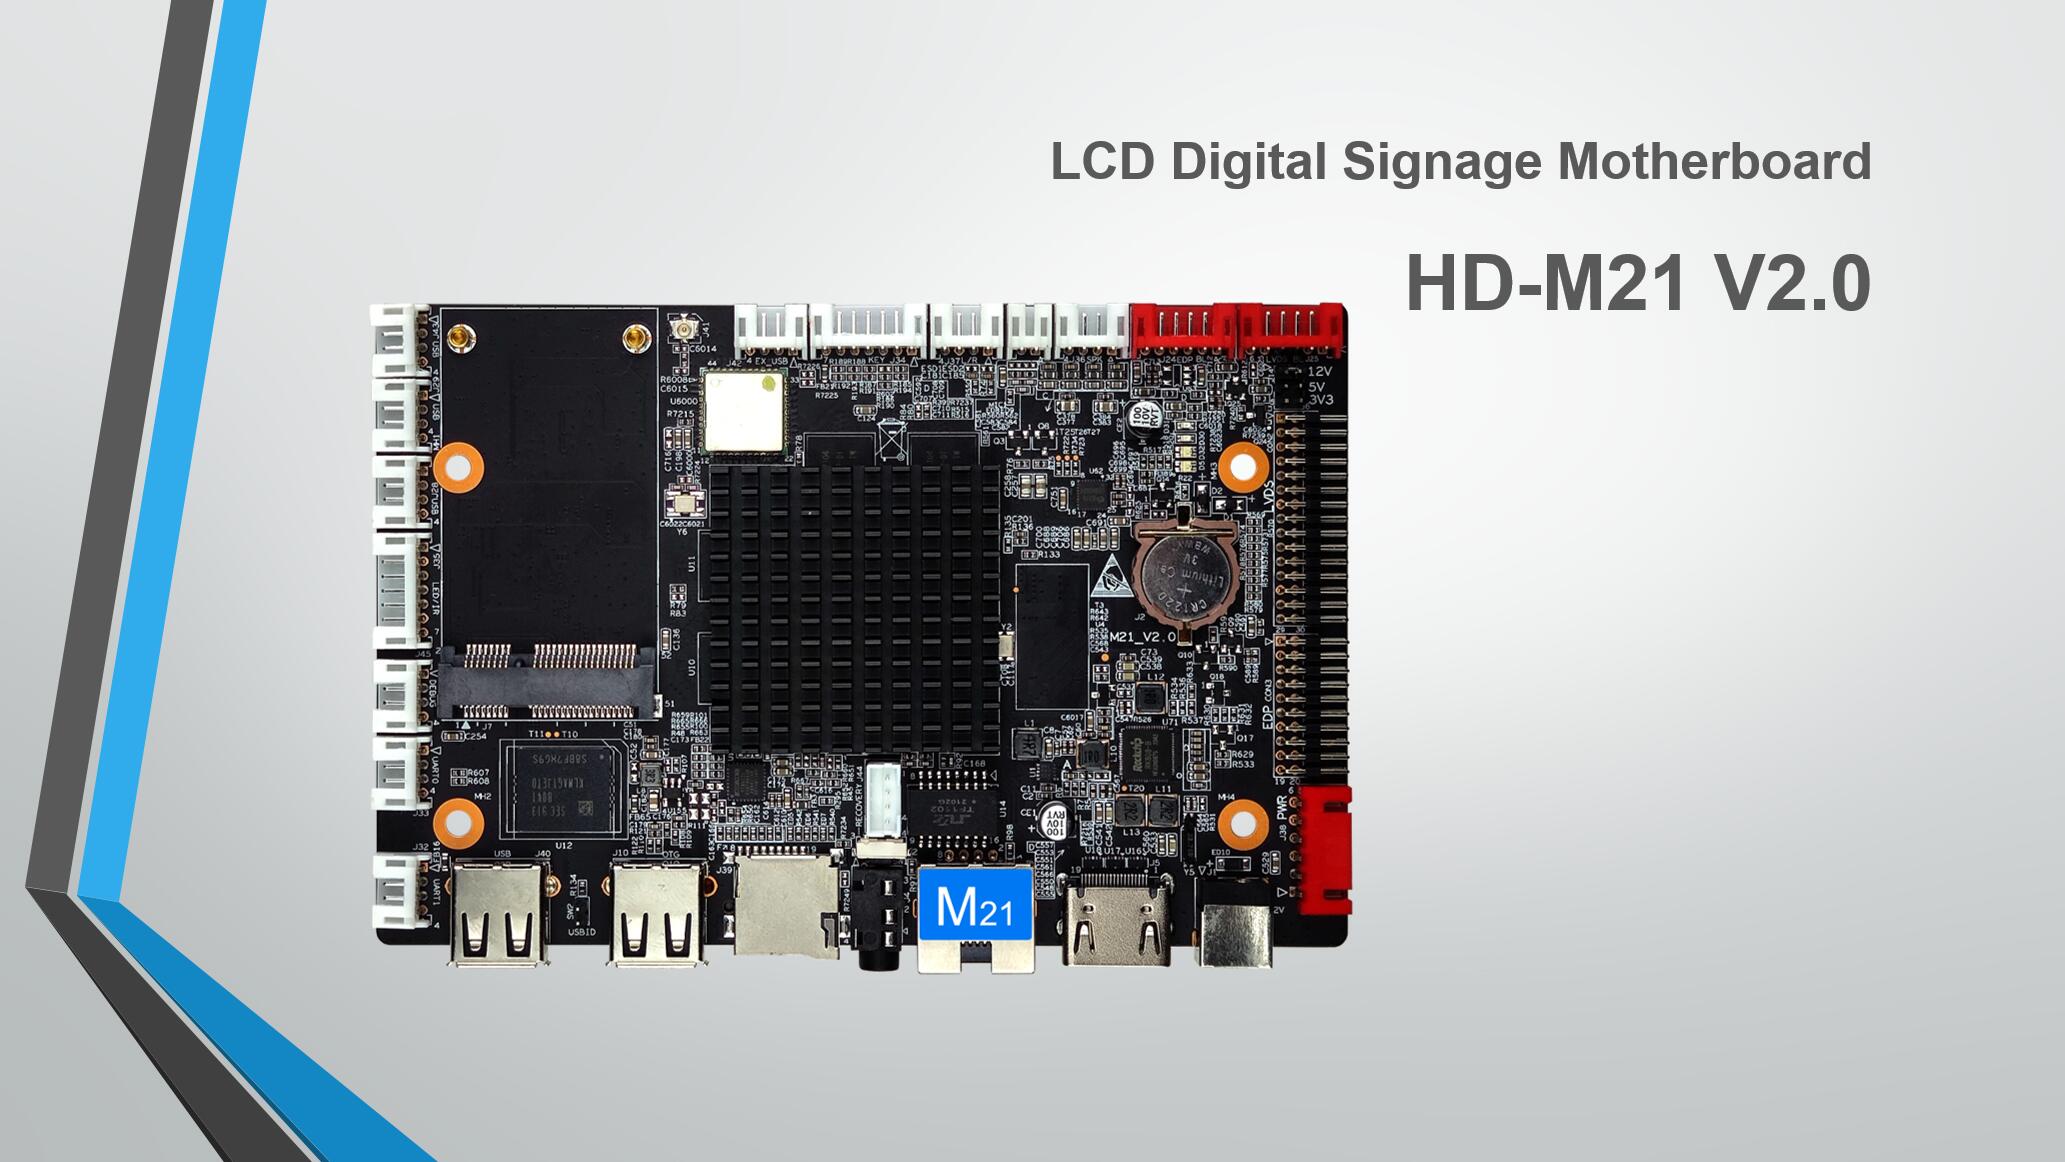 LCD Digital Signage Motherboard HD-M21